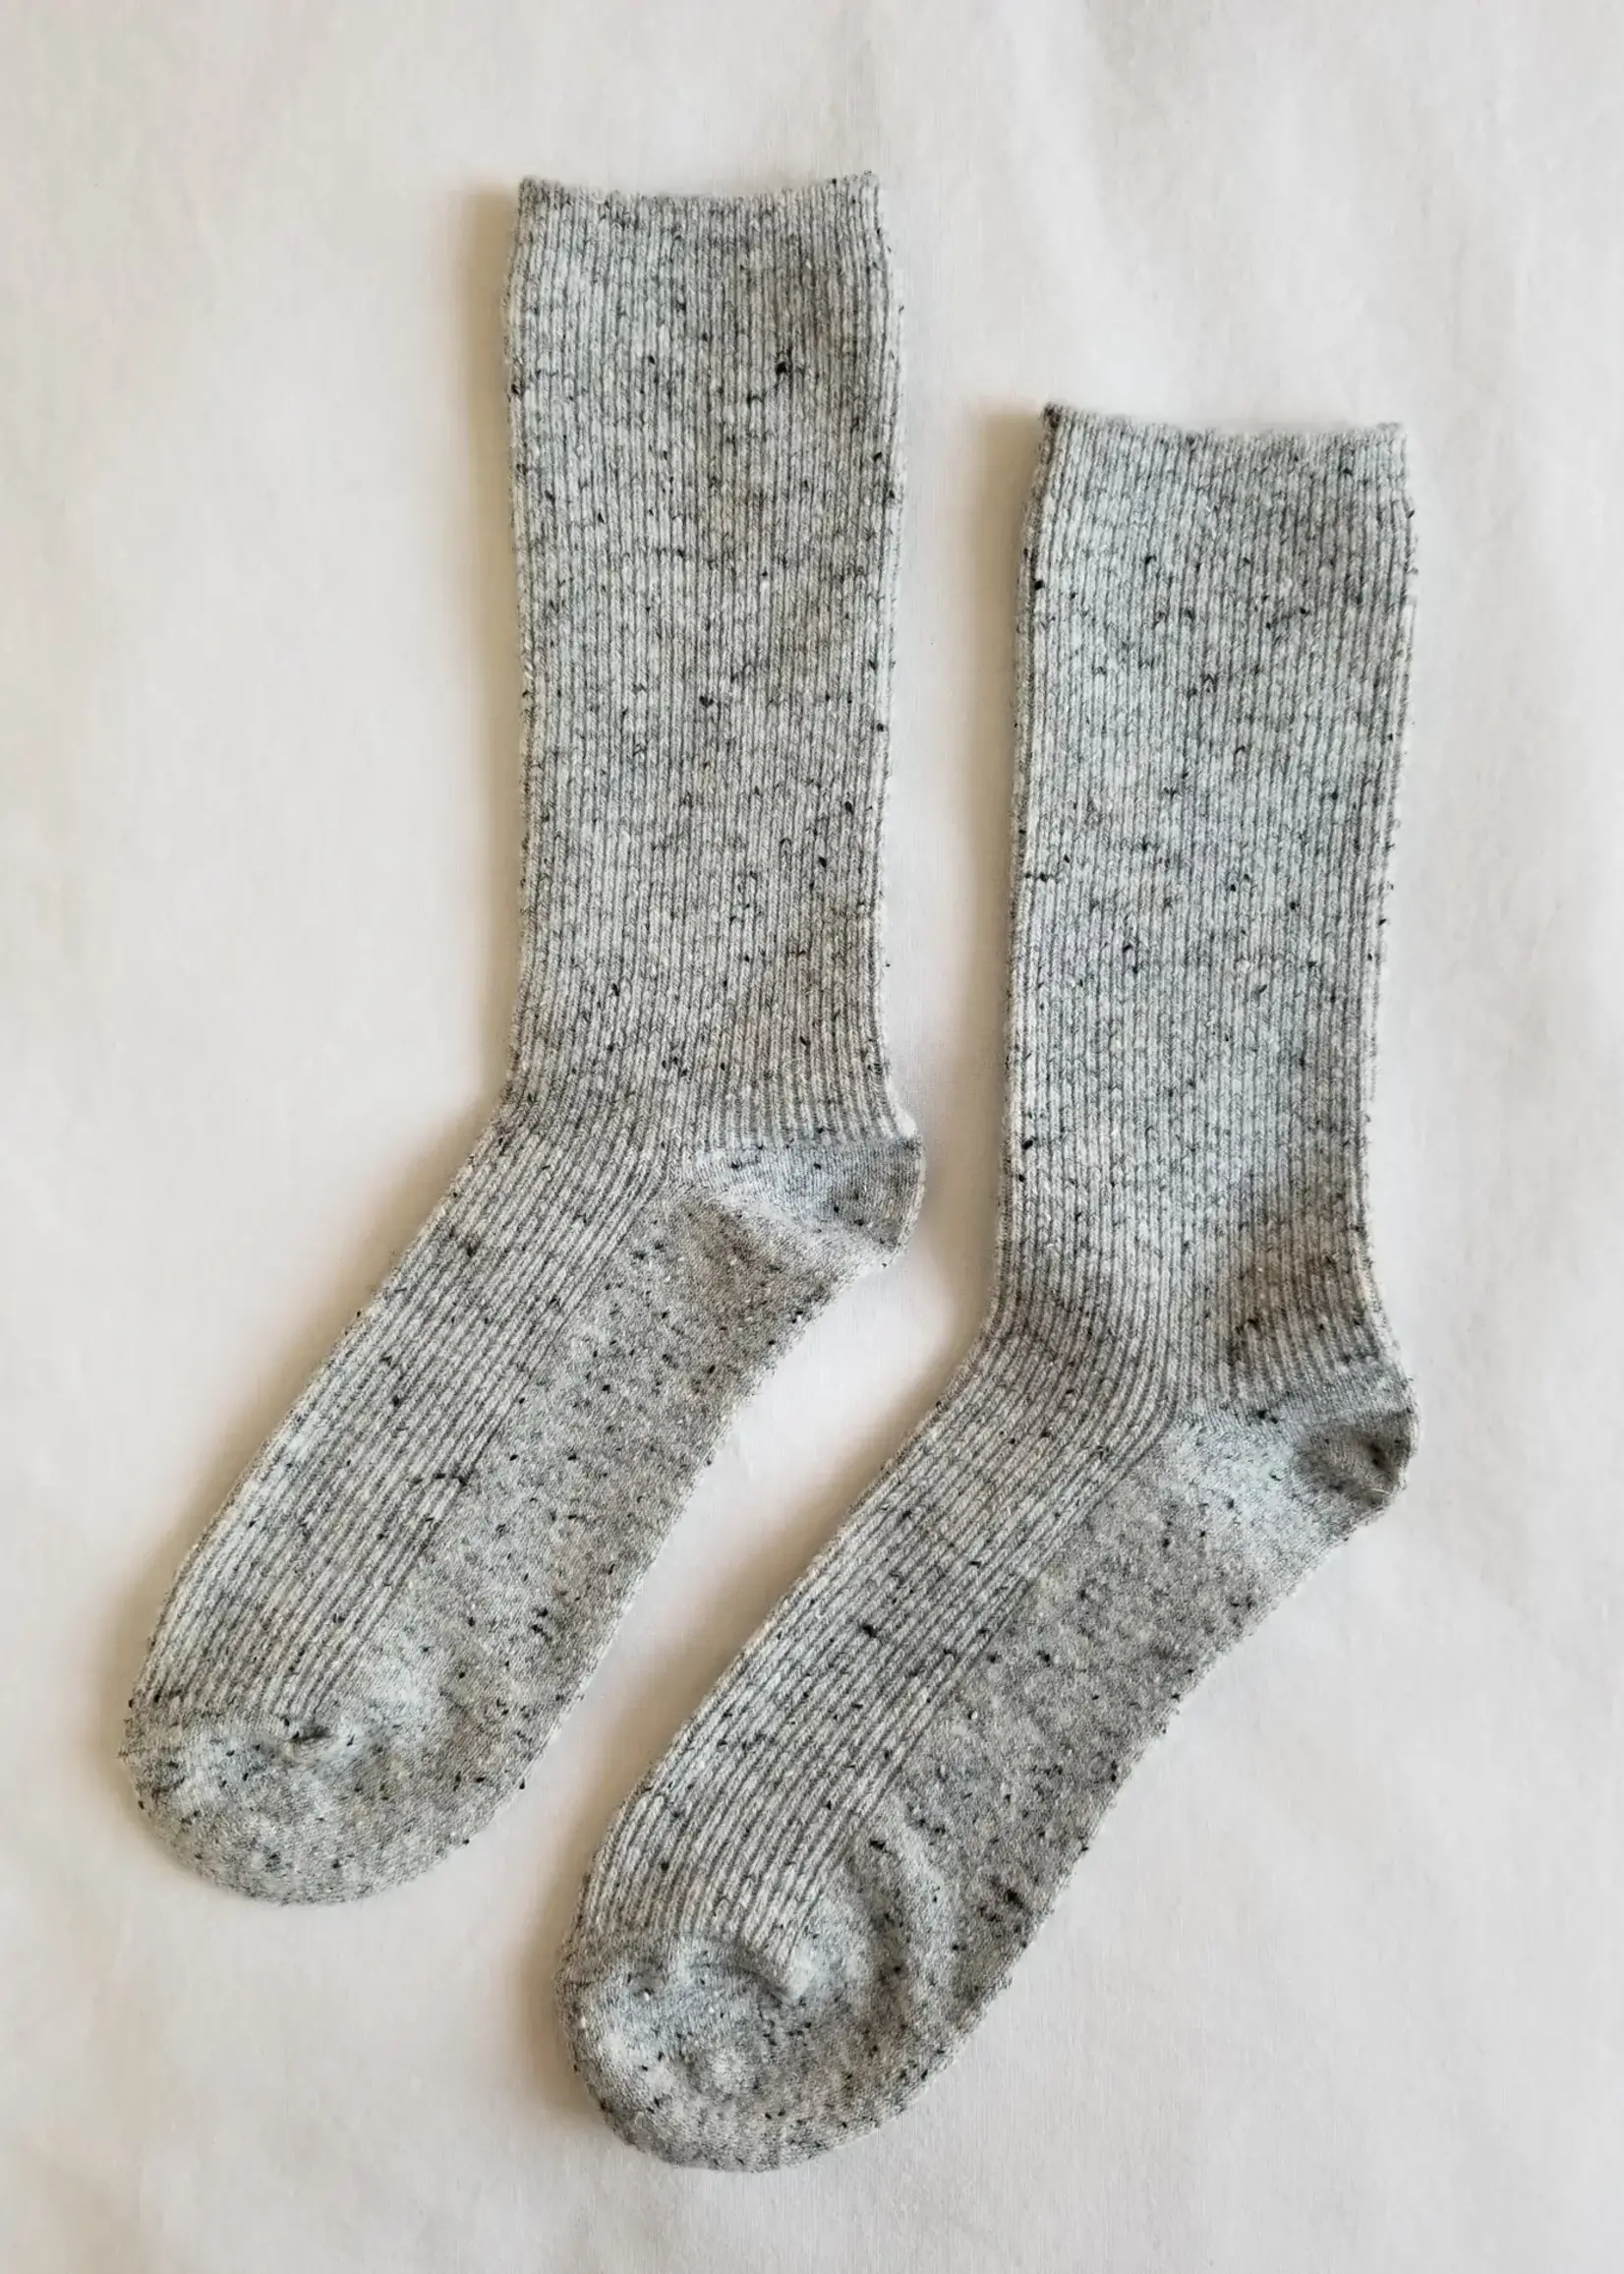 Le Bon Snow Socks